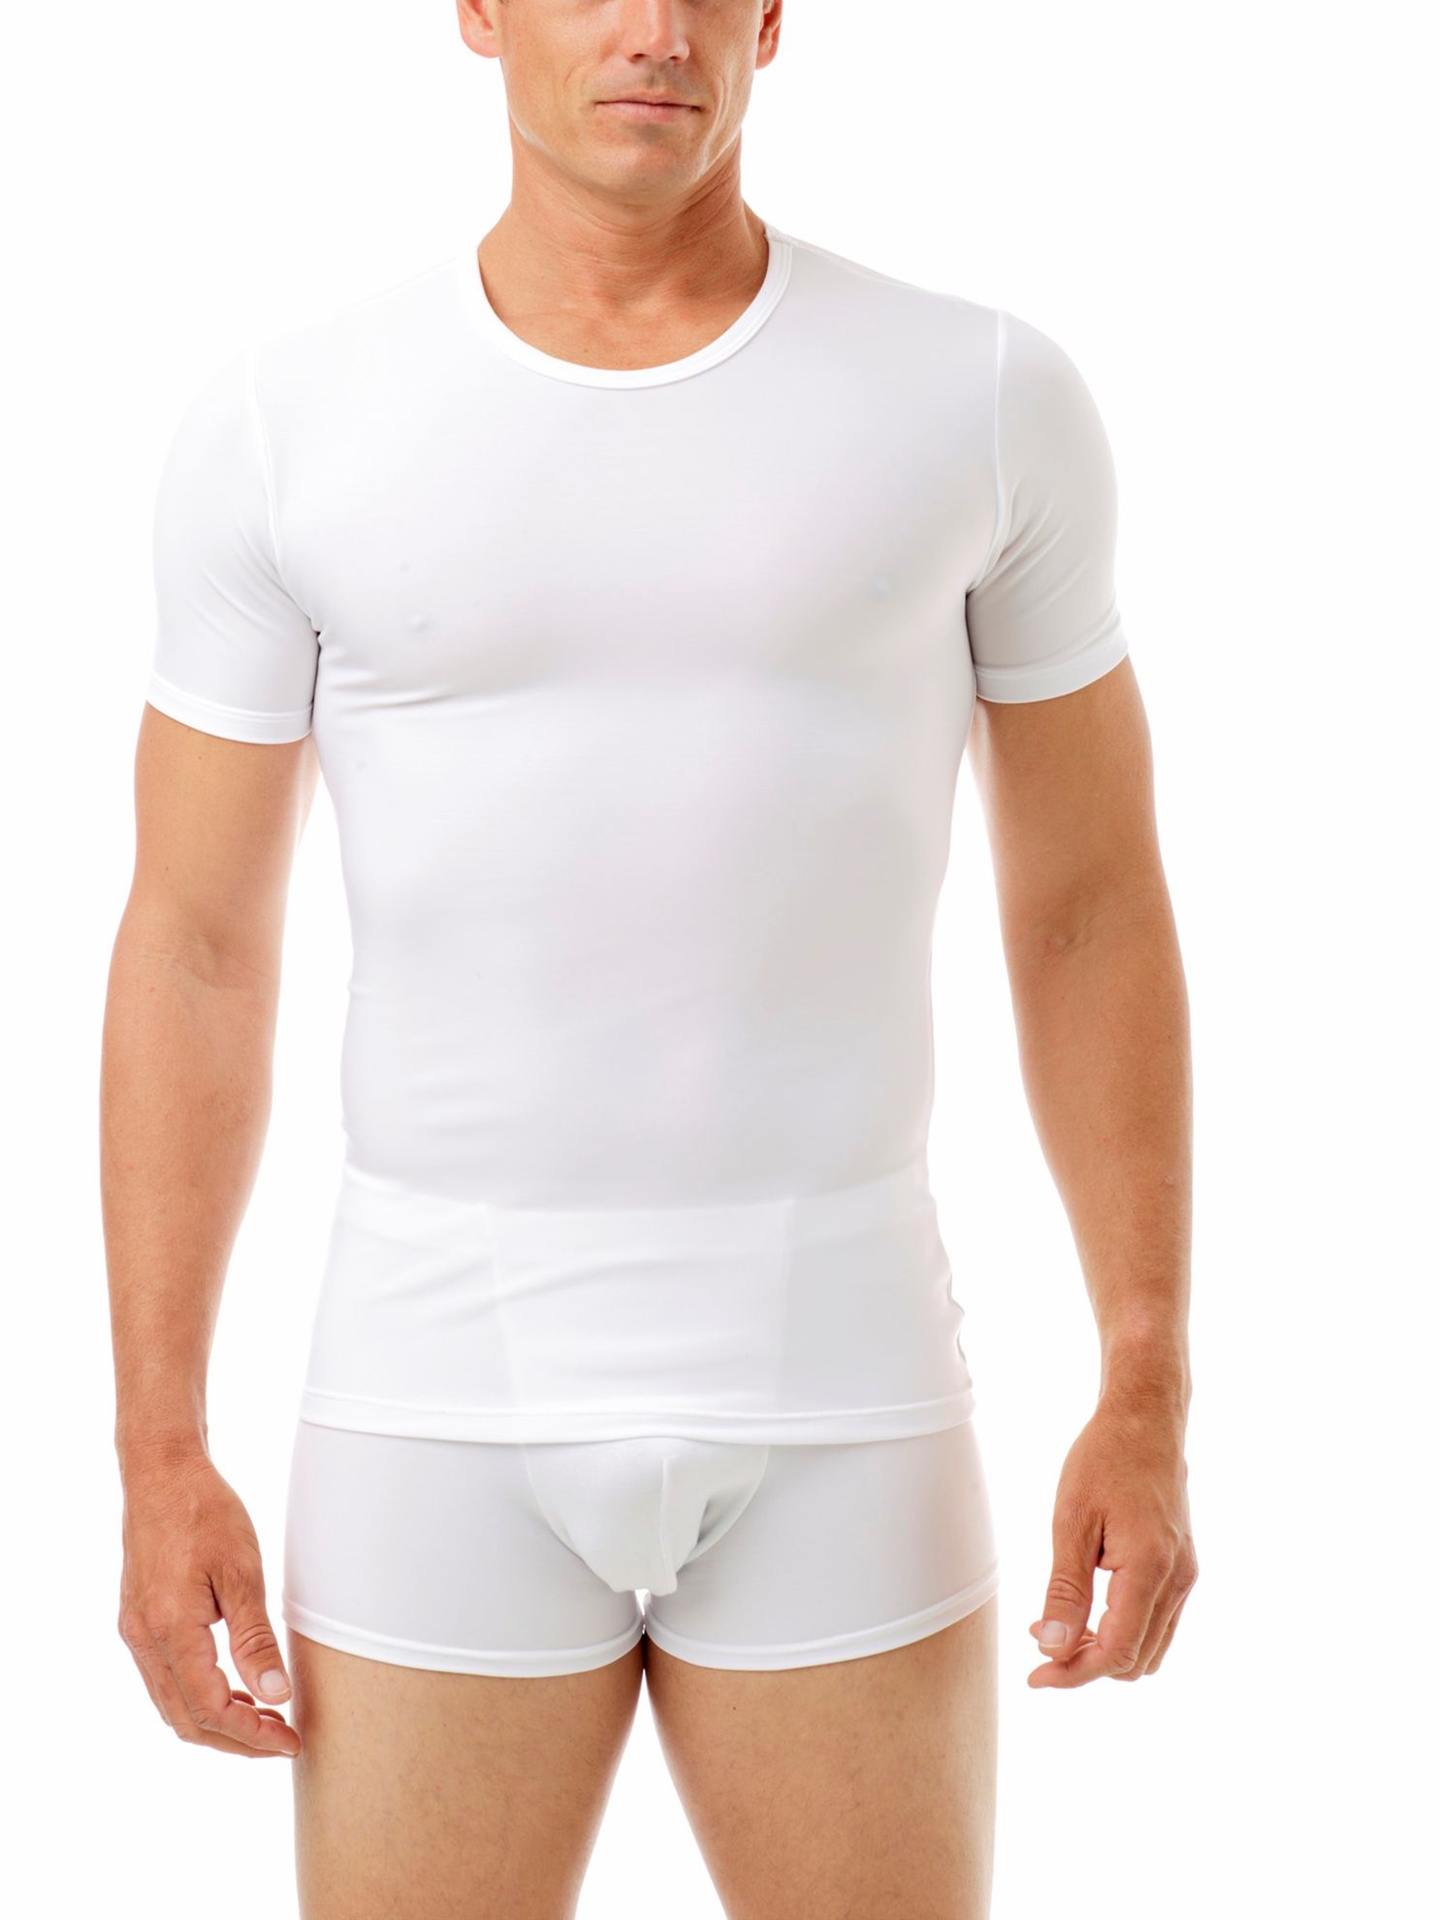 https://www.underworks.com/images/thumbs/0001741_microfiber-compression-crew-neck-t-shirt-with-short-sleeves-slightly-irregular-garment.jpeg